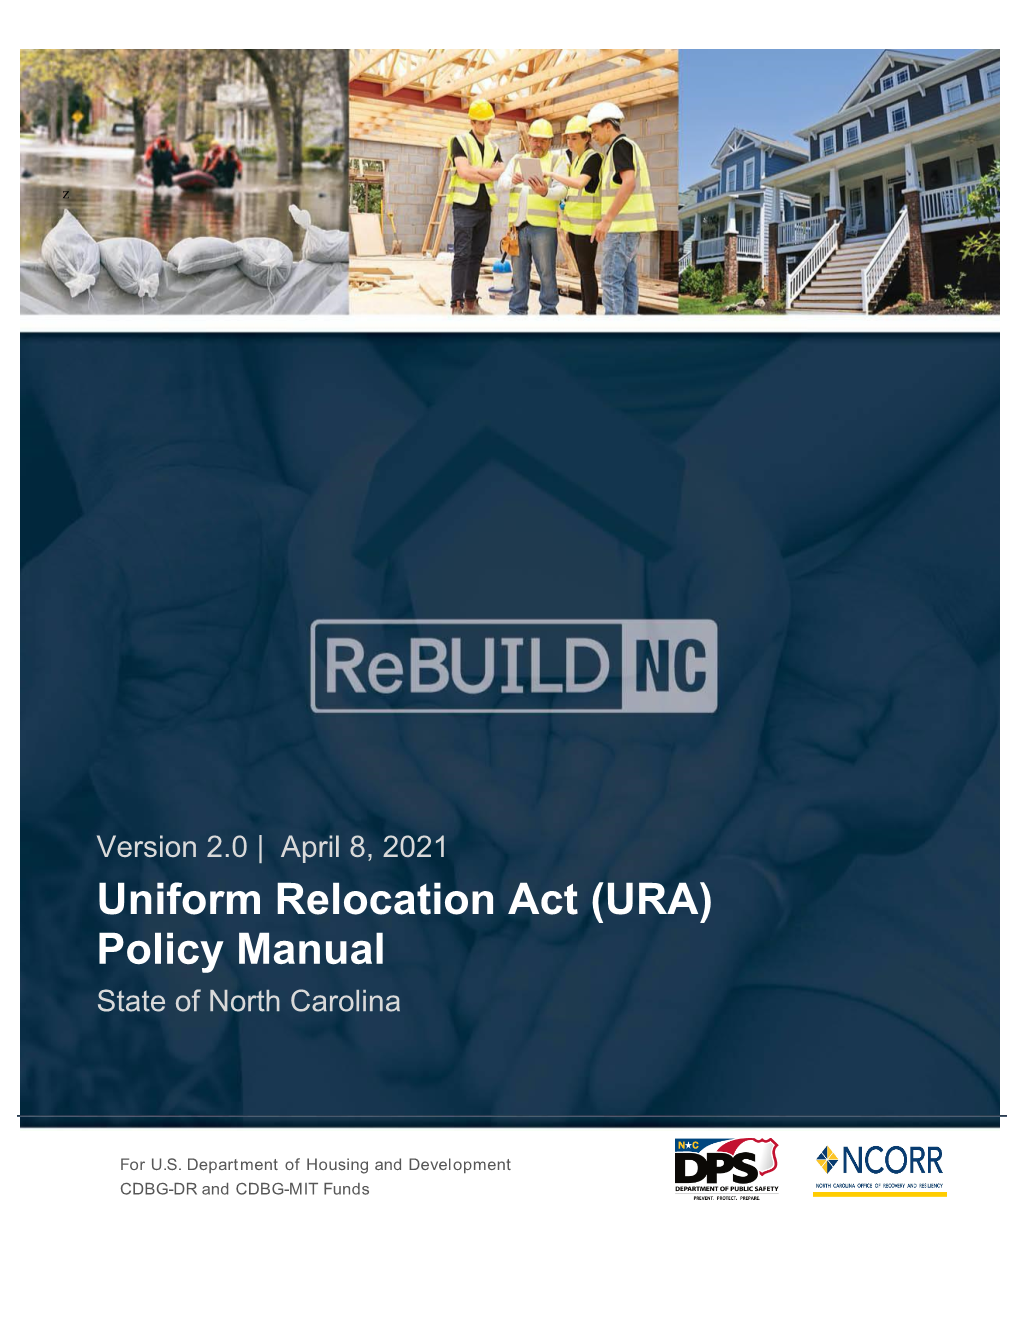 Uniform Relocation Act (URA) Policy Manual